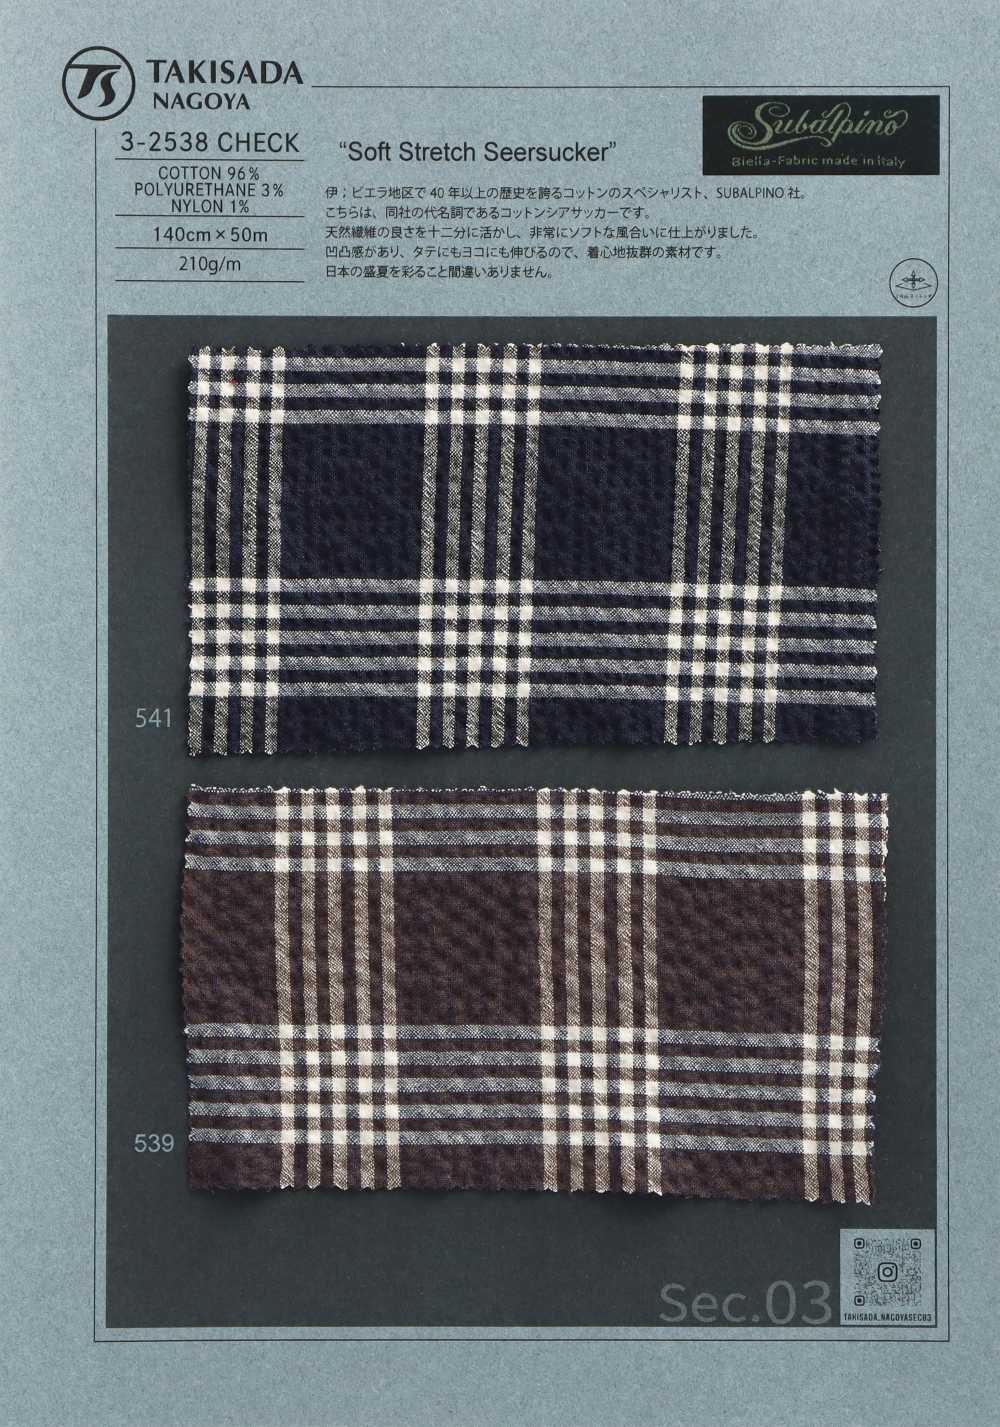 3-2538CHECK SUBALPINO Shear Seersucker Check[Textile / Fabric] Takisada Nagoya